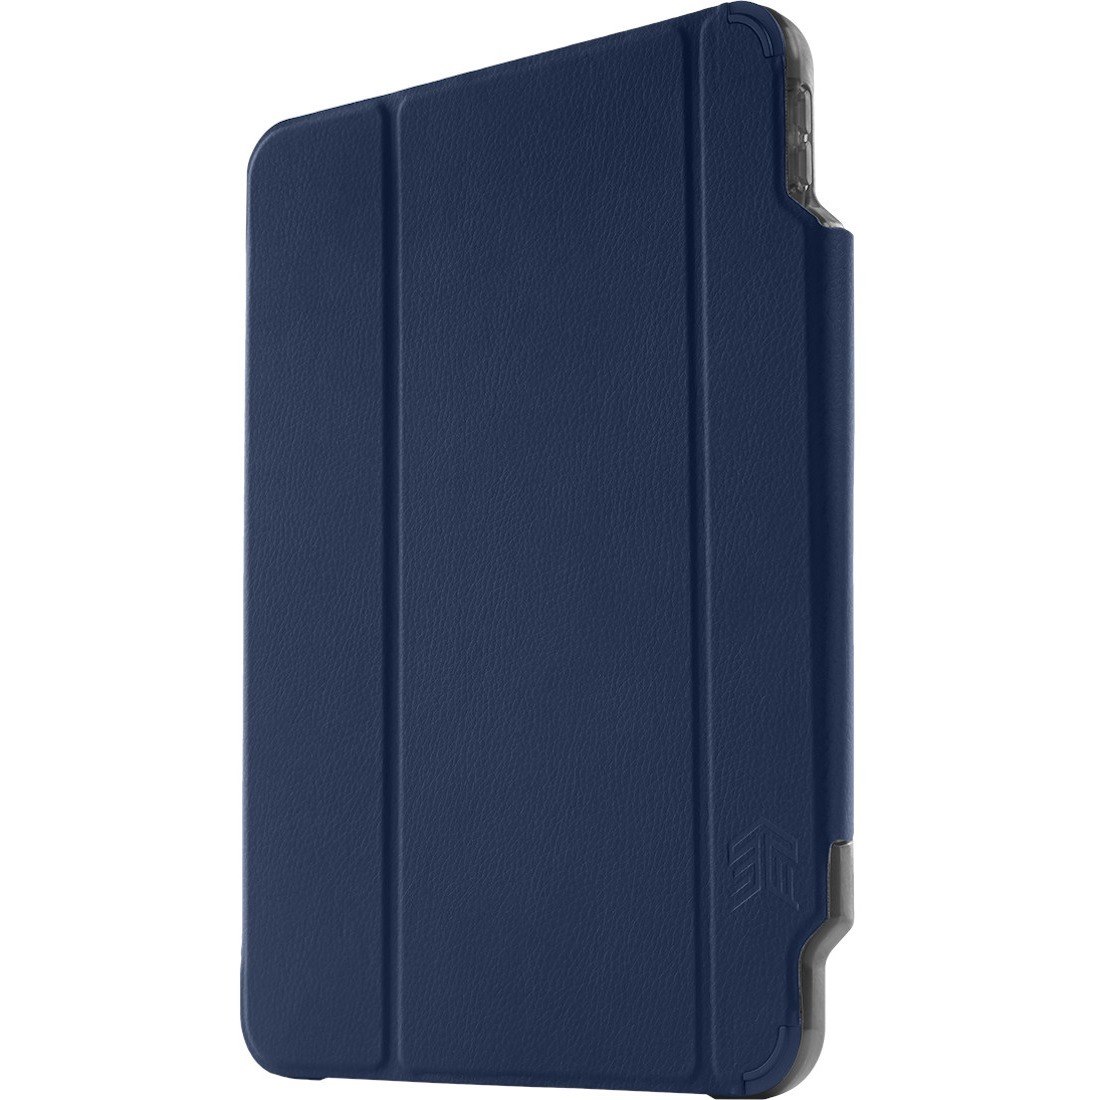 STM Goods Dux Studio Carrying Case for 11" Apple iPad Pro, iPad Pro (2nd Generation), iPad Pro (3rd Generation) Tablet - Midnight Blue